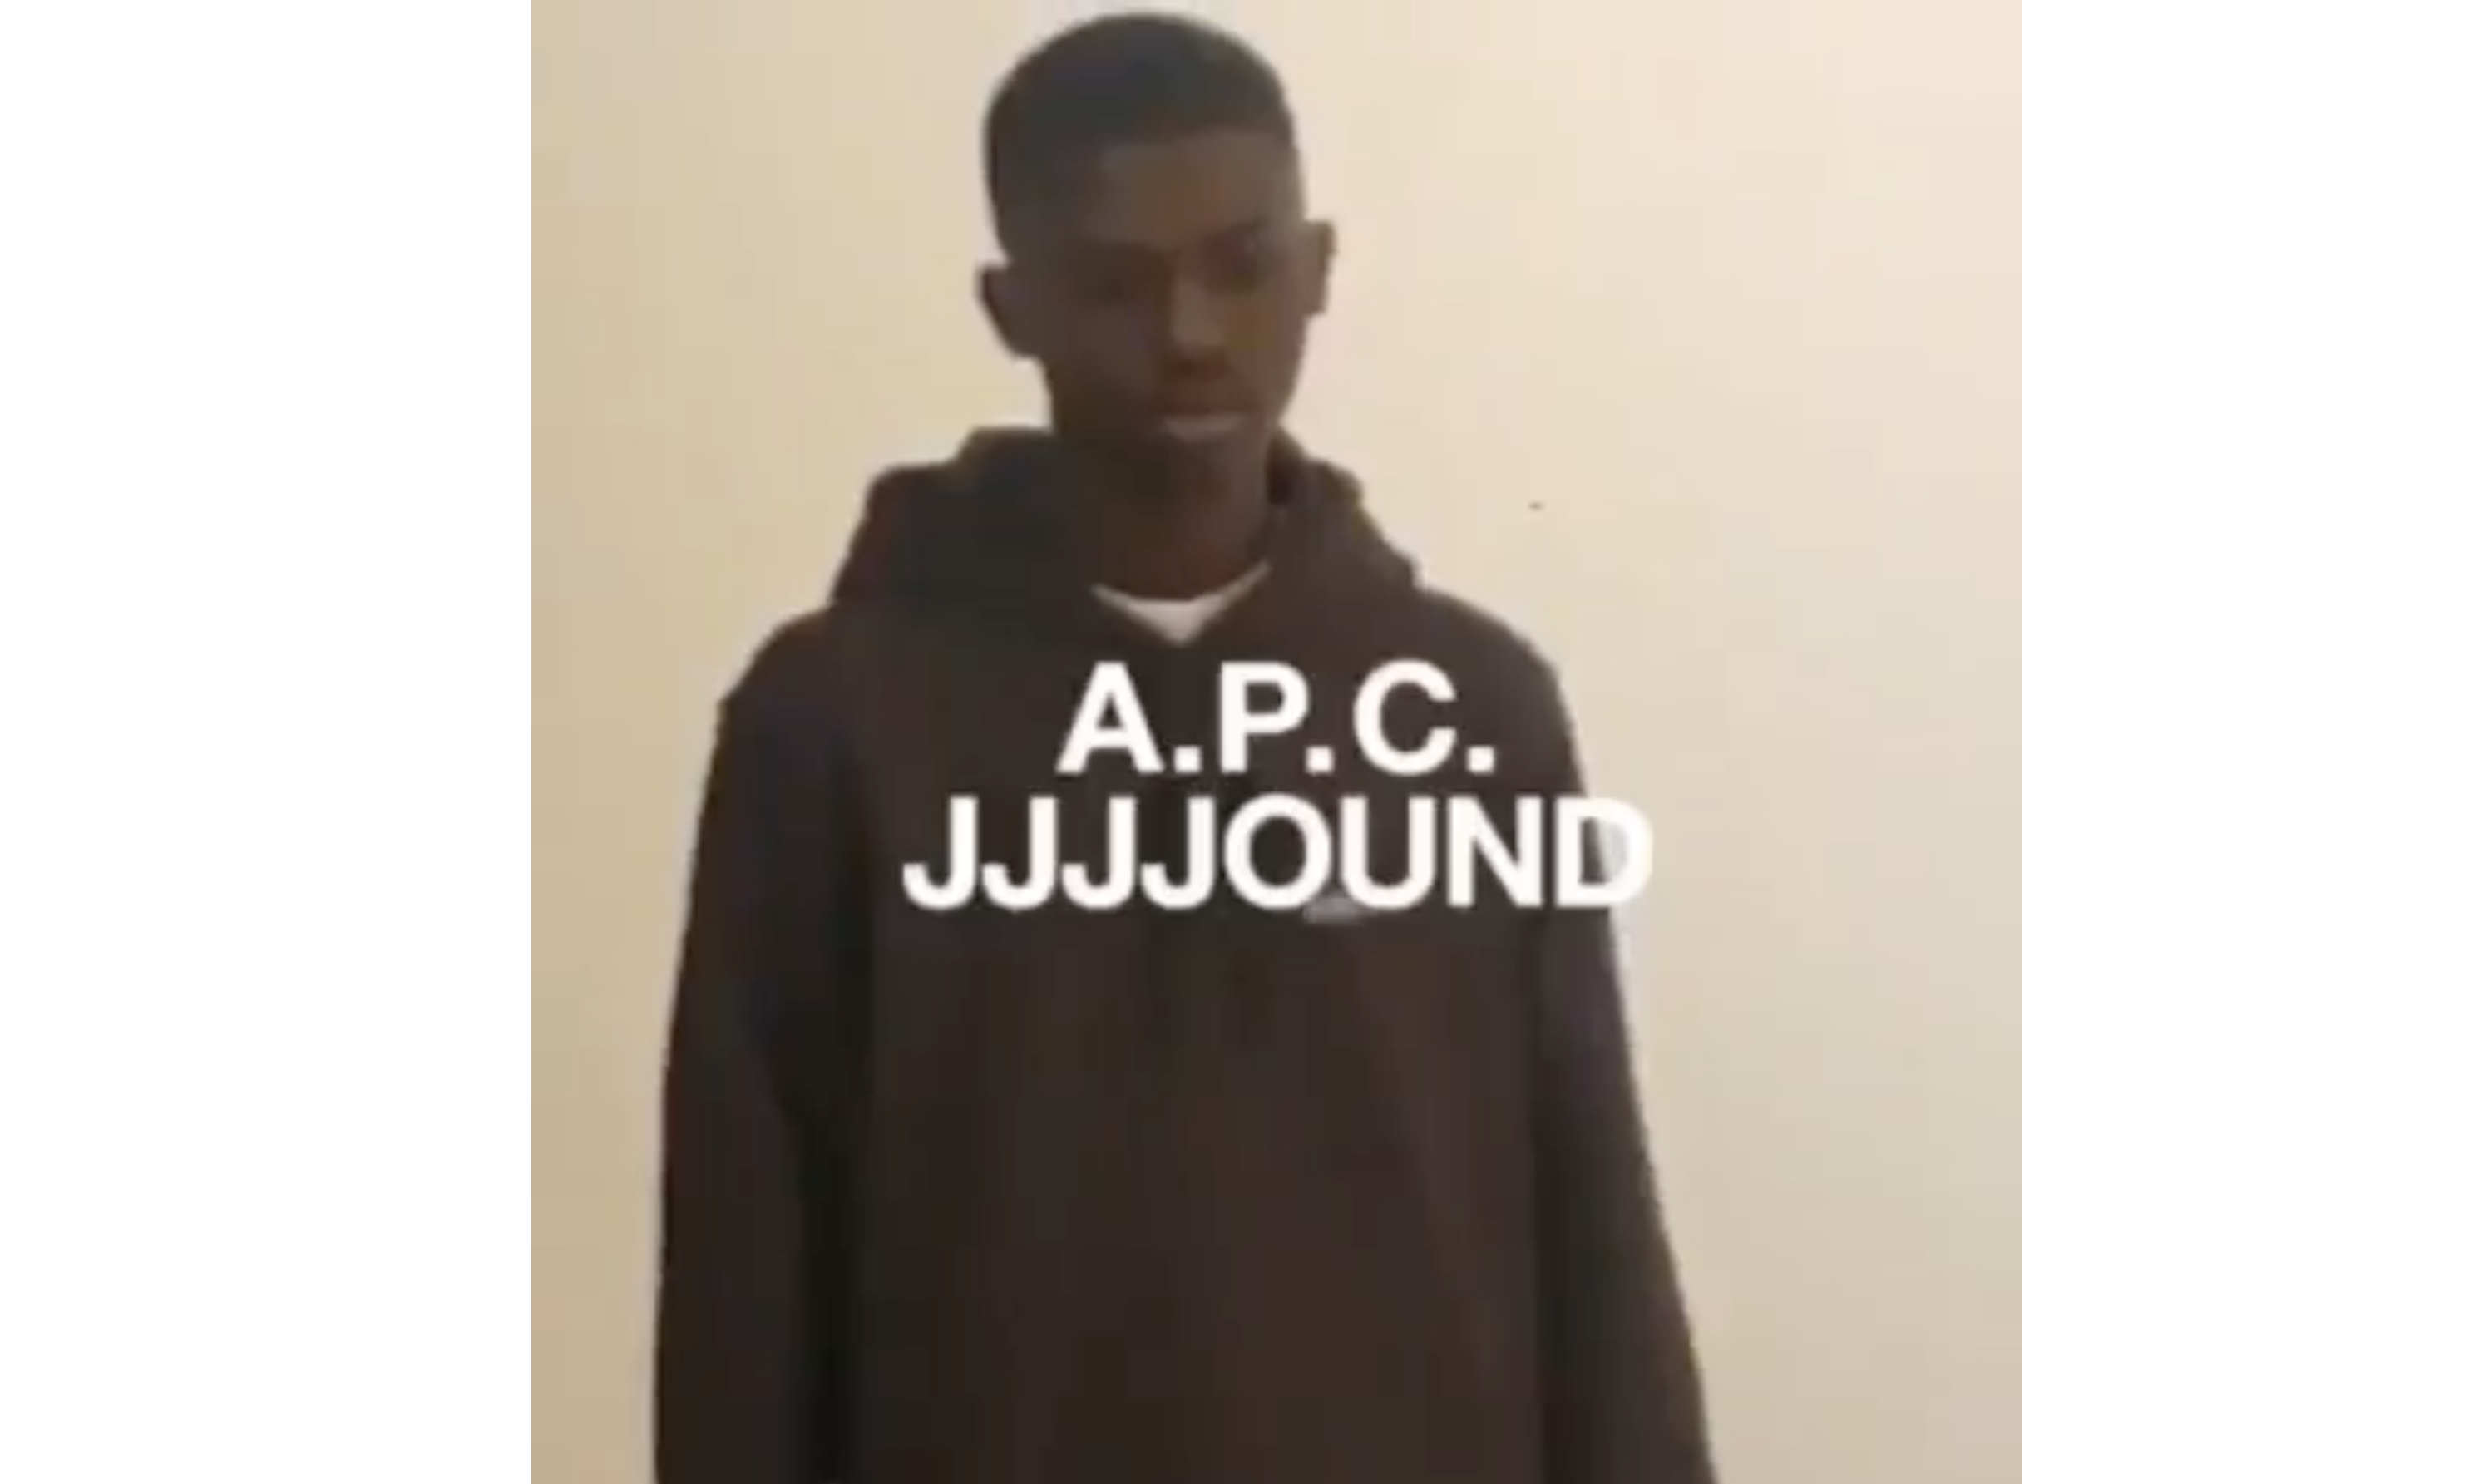 JJJJound x A.P.C. 联名系列预告片释出